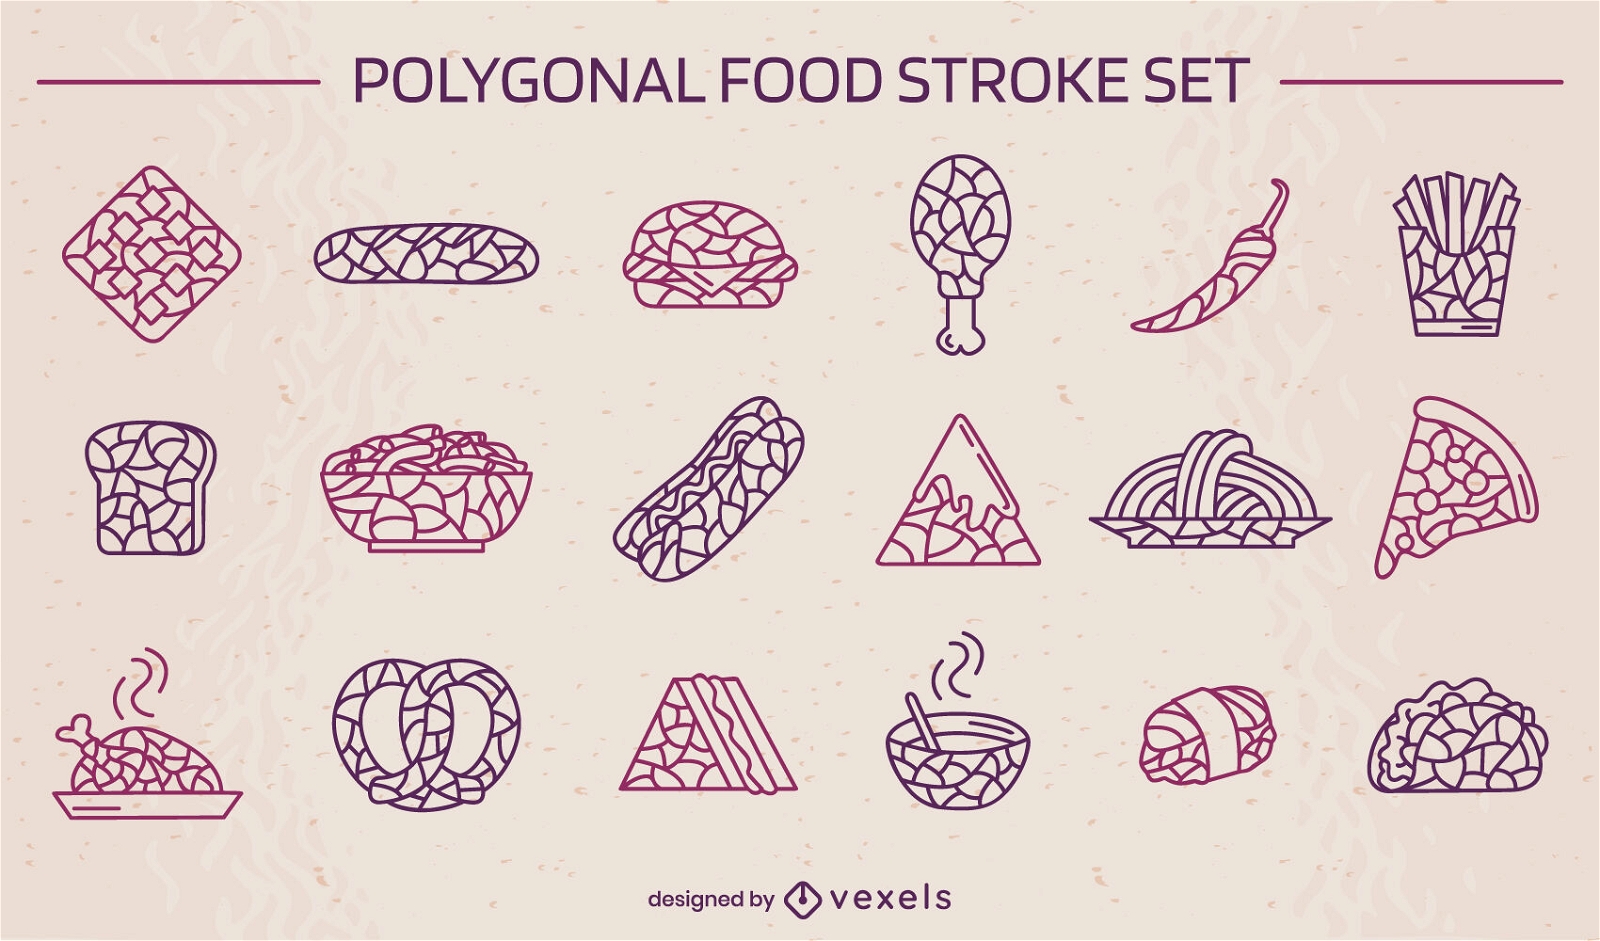 Polygonal fast food stroke set